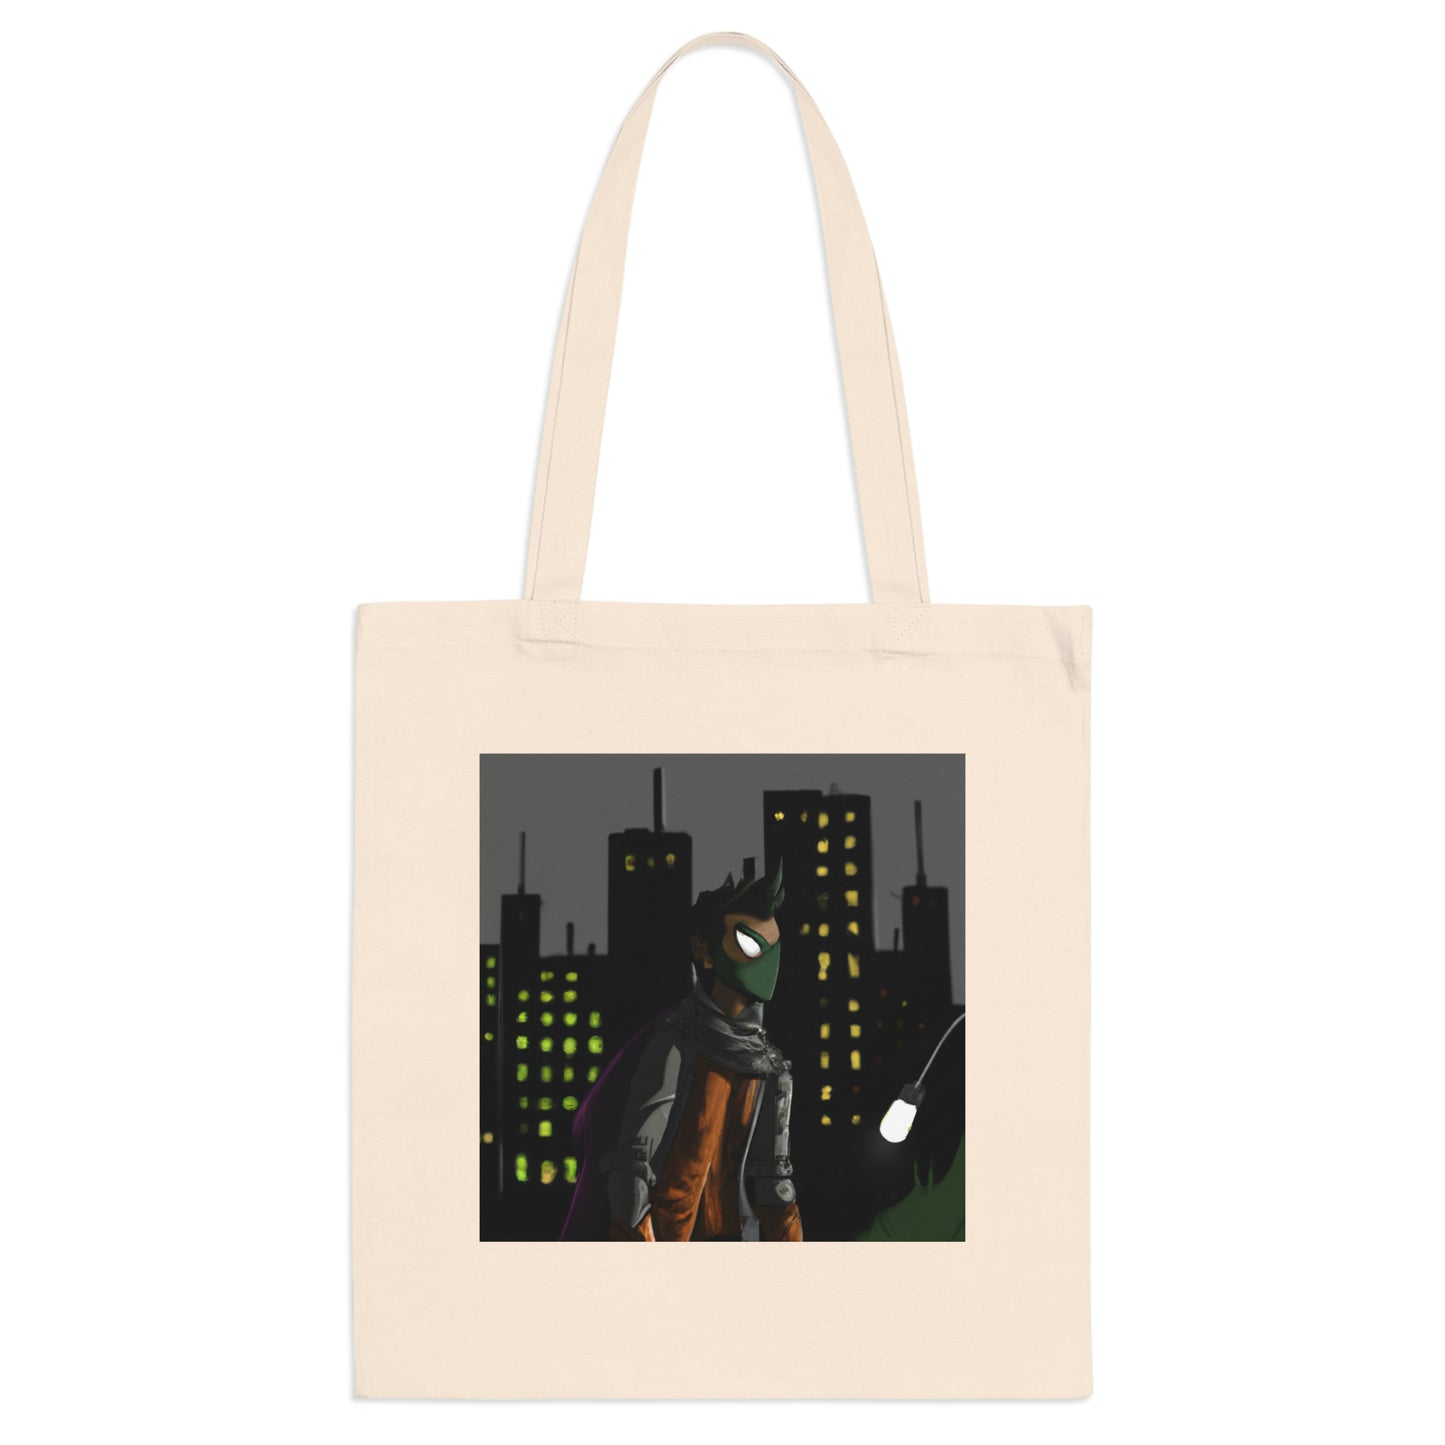 "Stranded in Mystery City" - The Alien Tote Bag